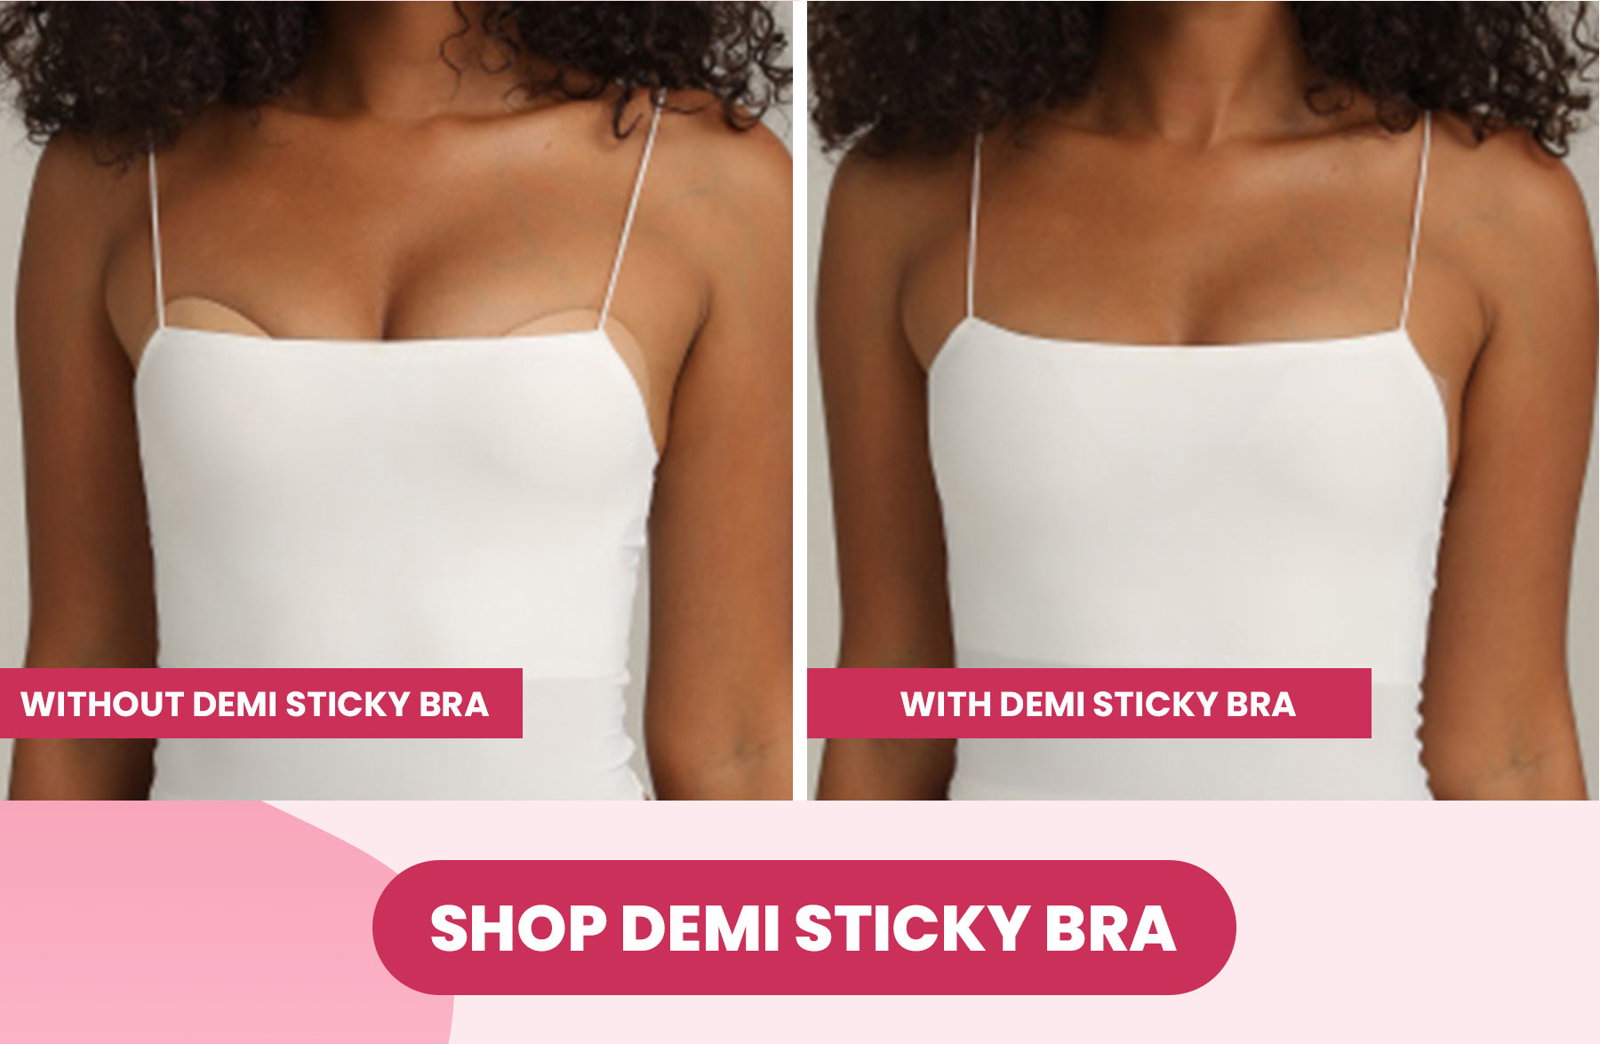 BOOMBA: INTRODUCING: The NEW Demi Sticky Bra